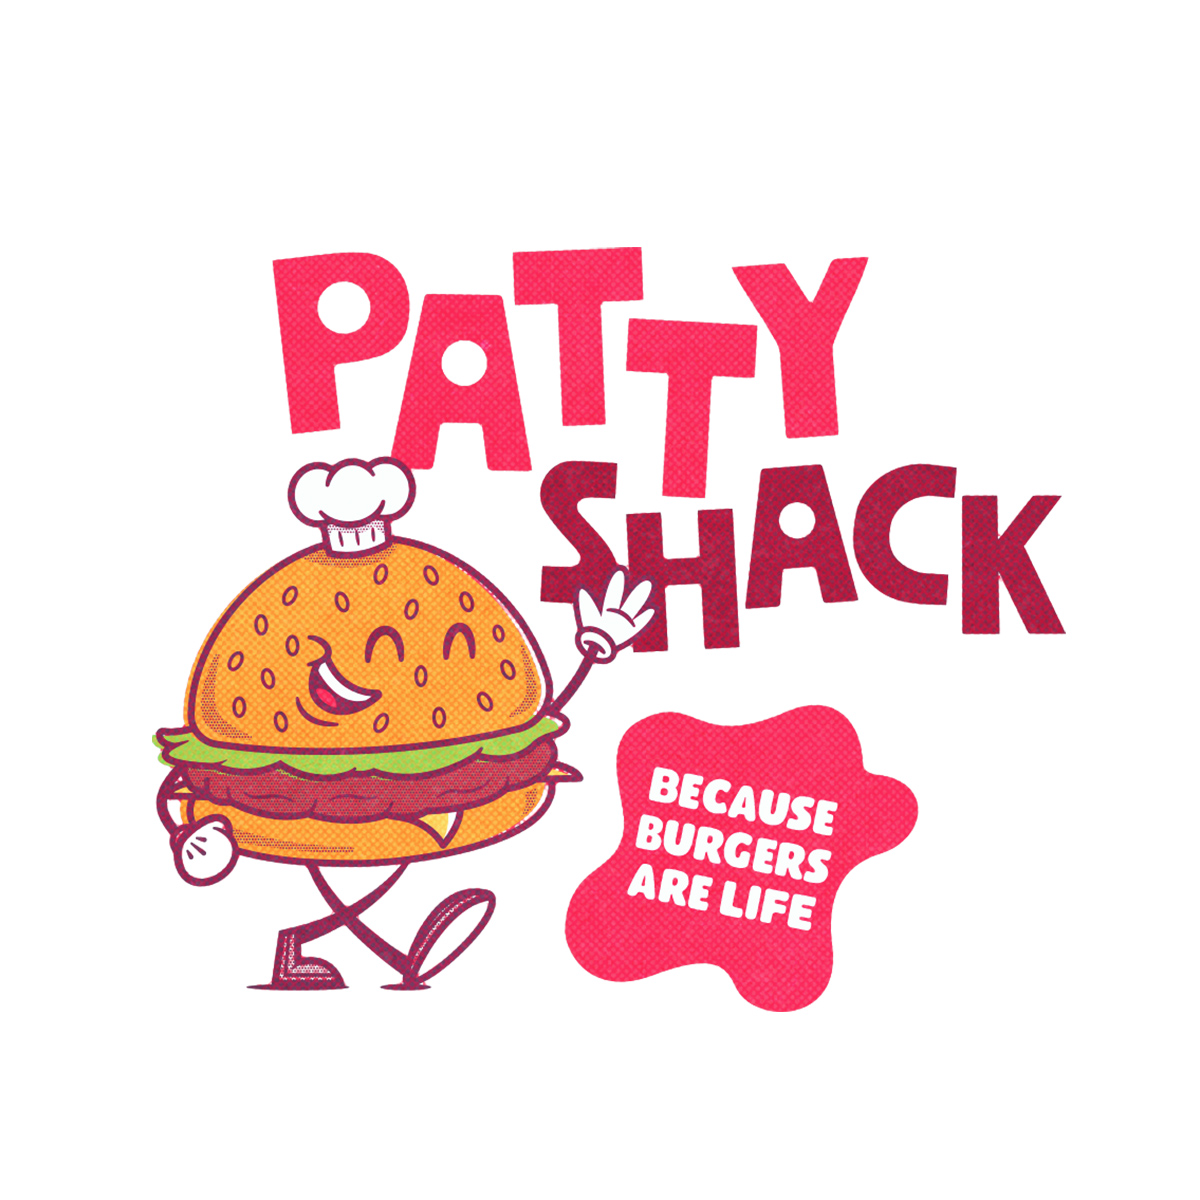 Various-Logos_Patty-shack